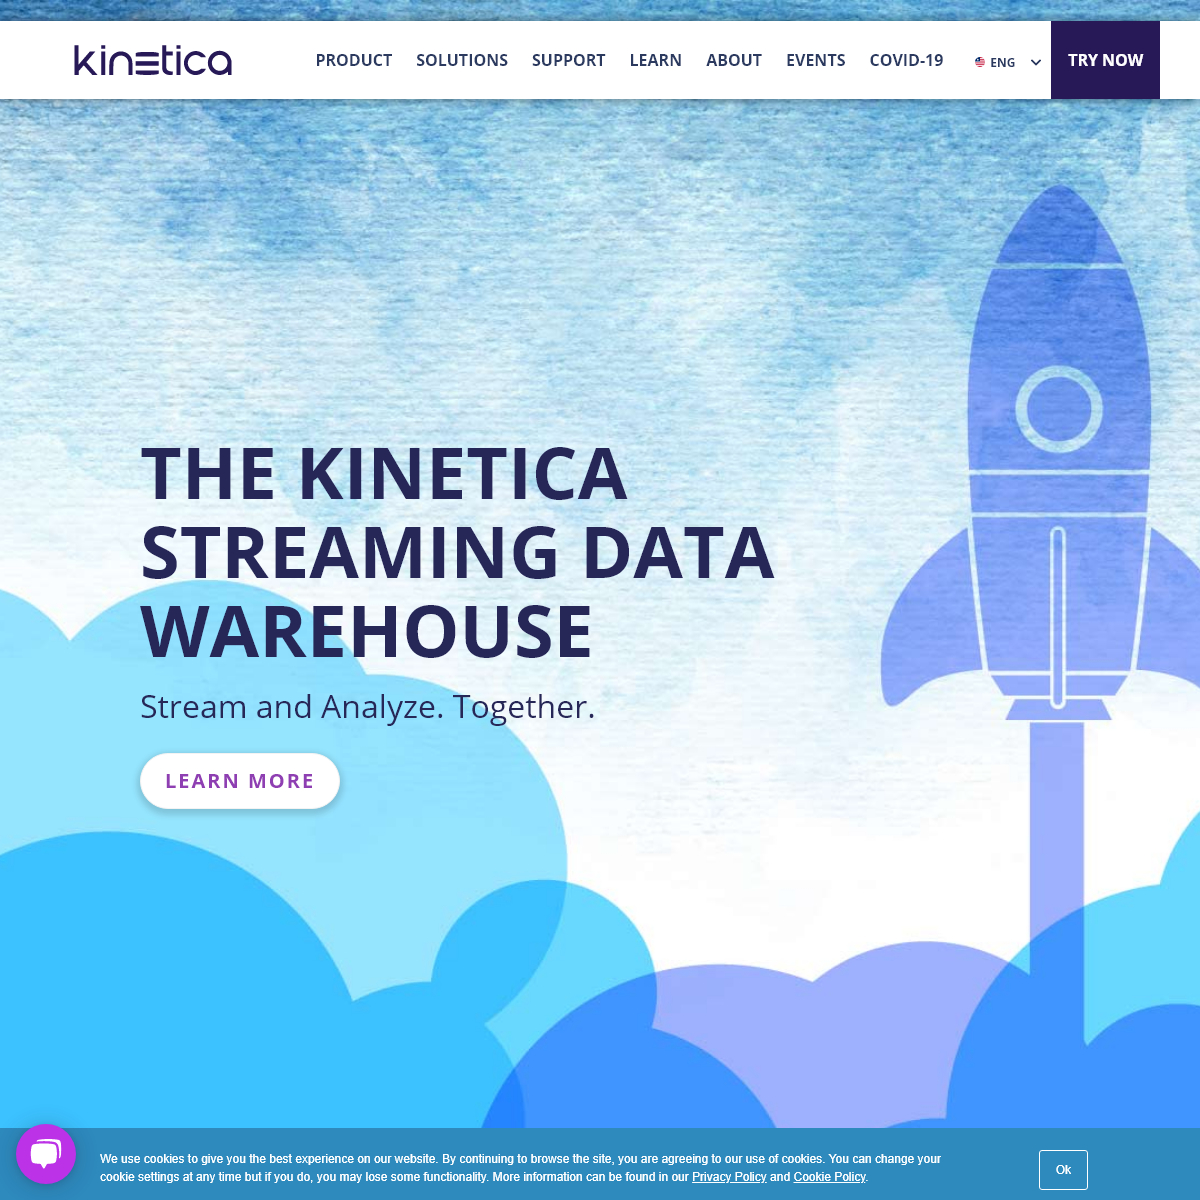 A complete backup of kinetica.com